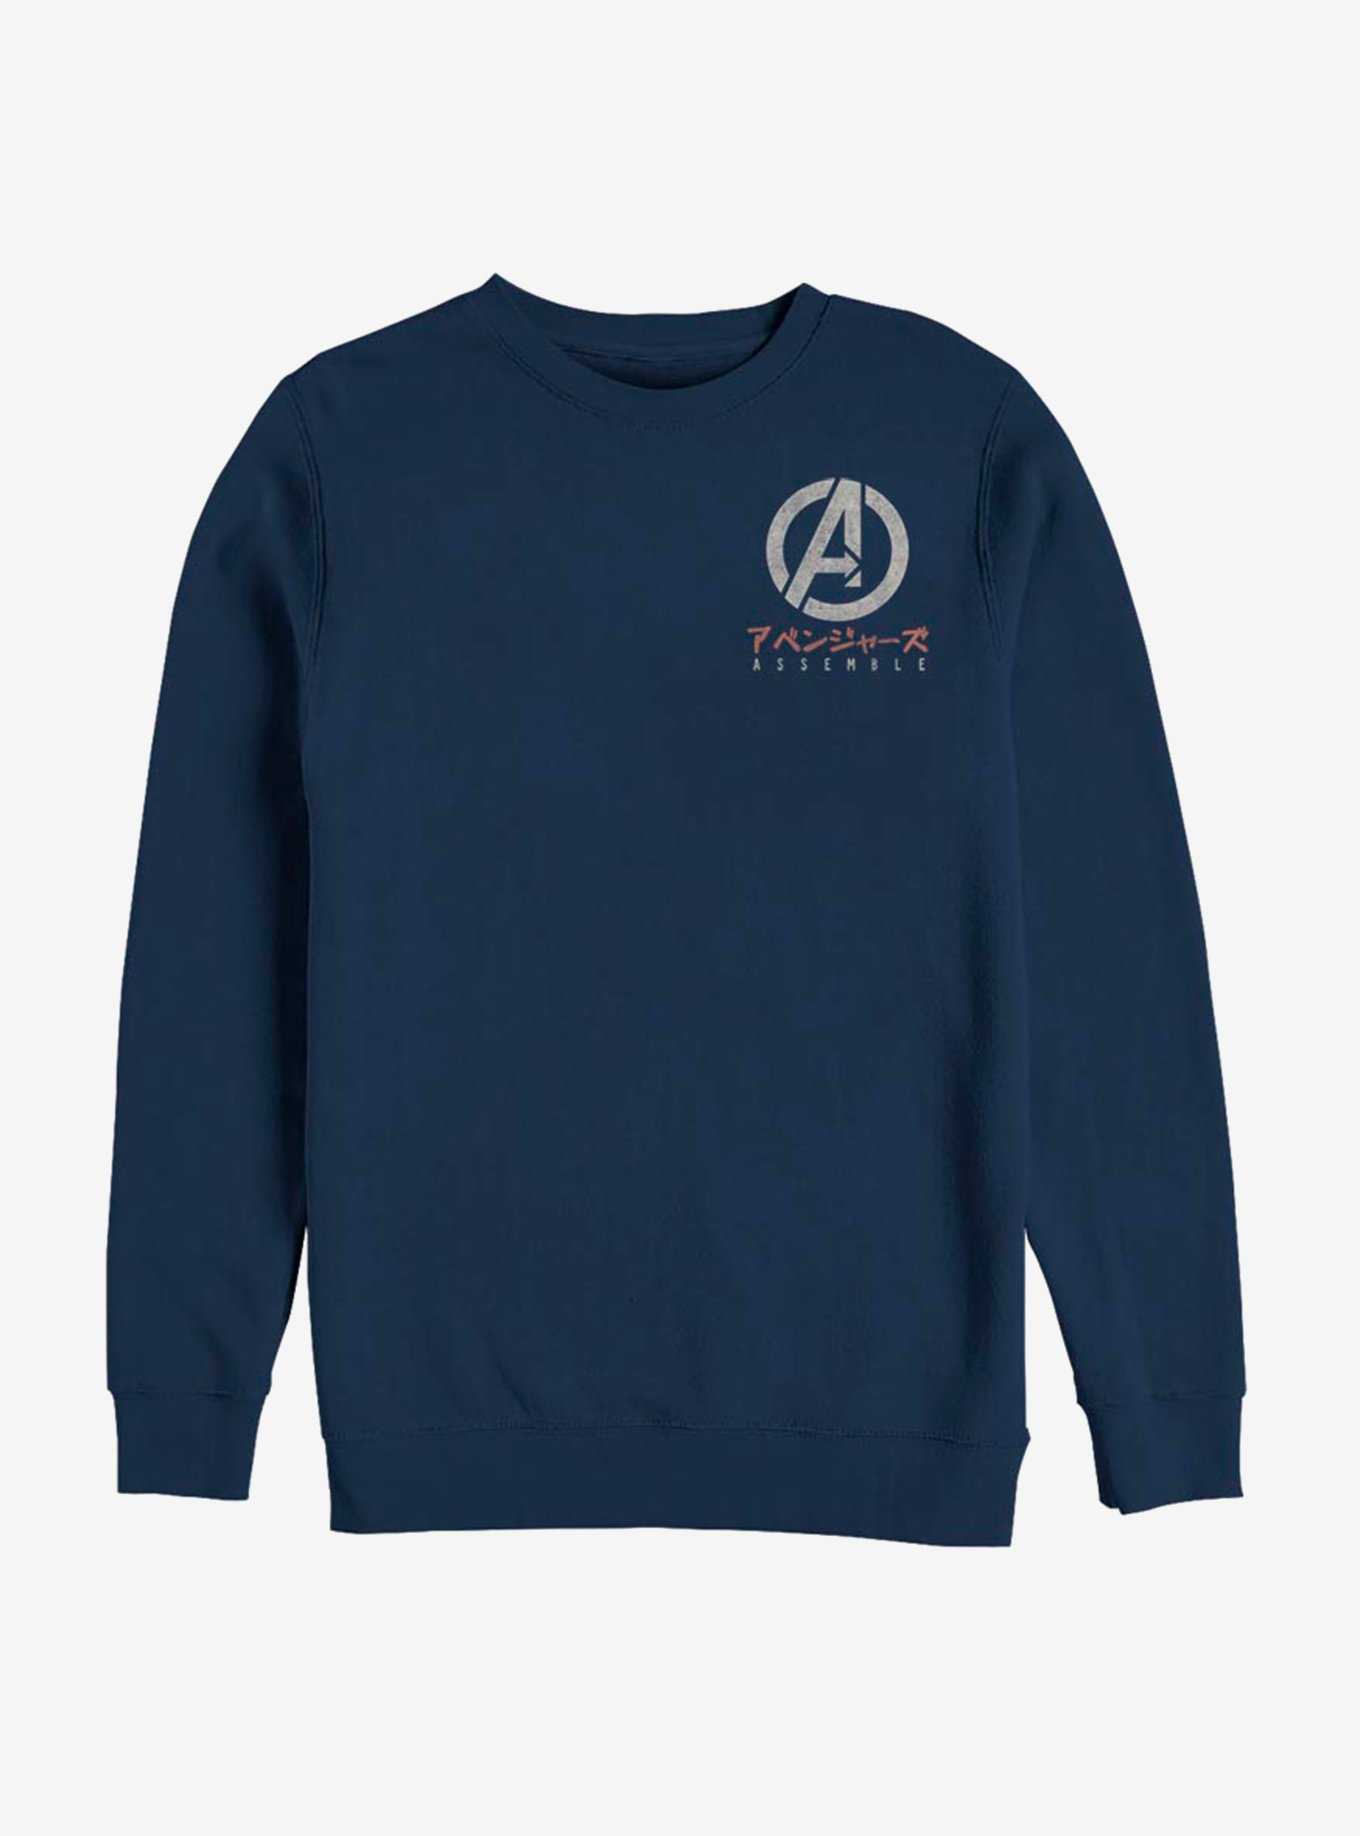 Avengers Avengers Assemble Sweatshirt, , hi-res